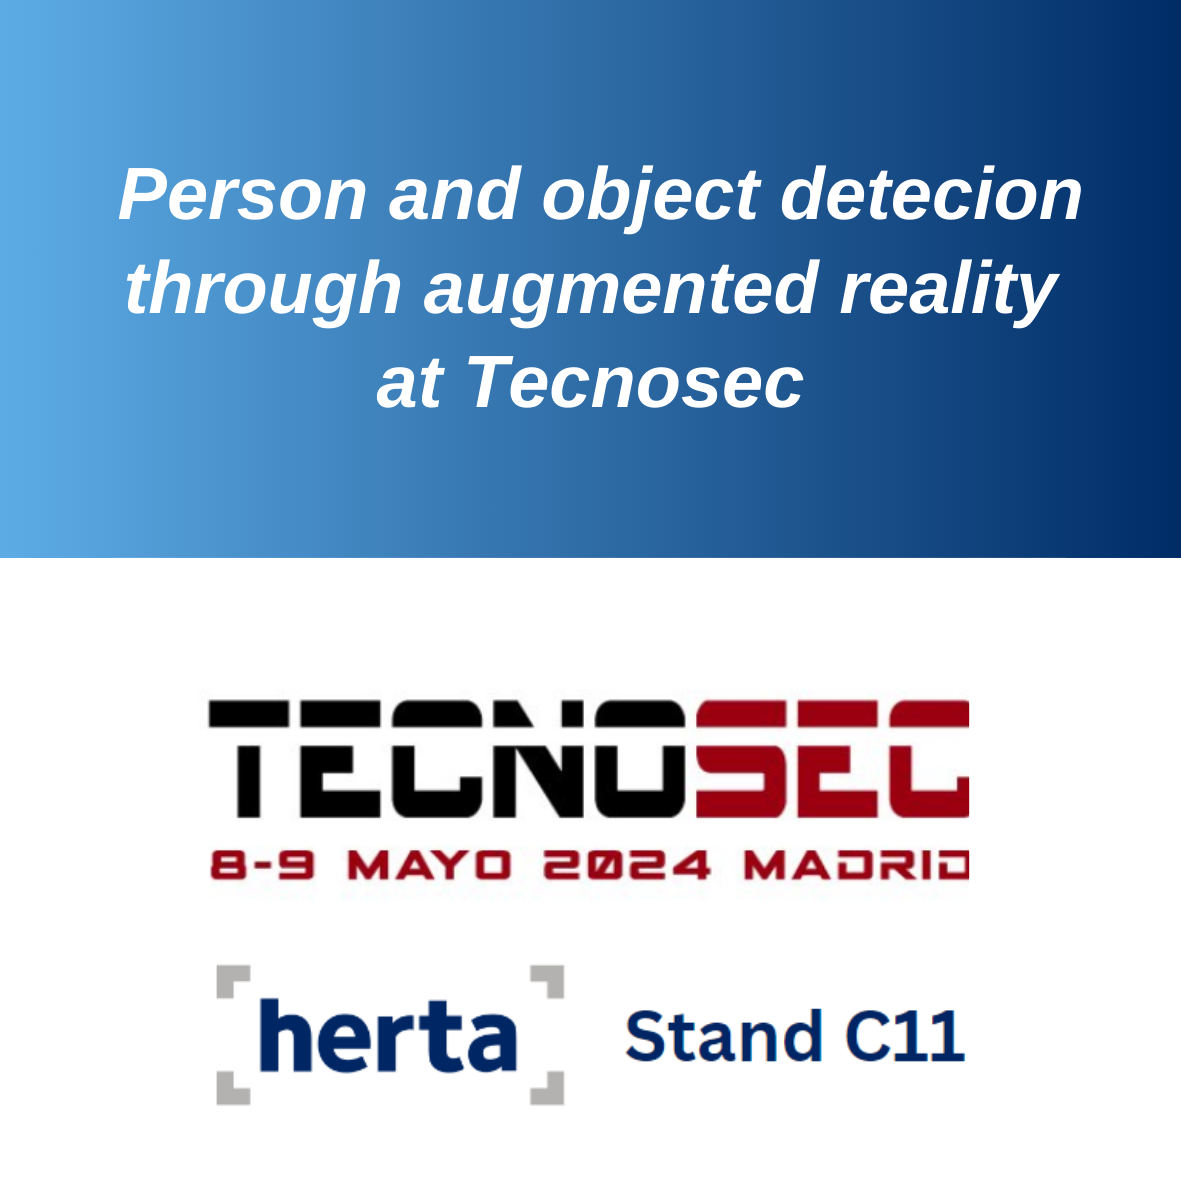 Herta will exhibit its innovative identification technology at Tecnosec